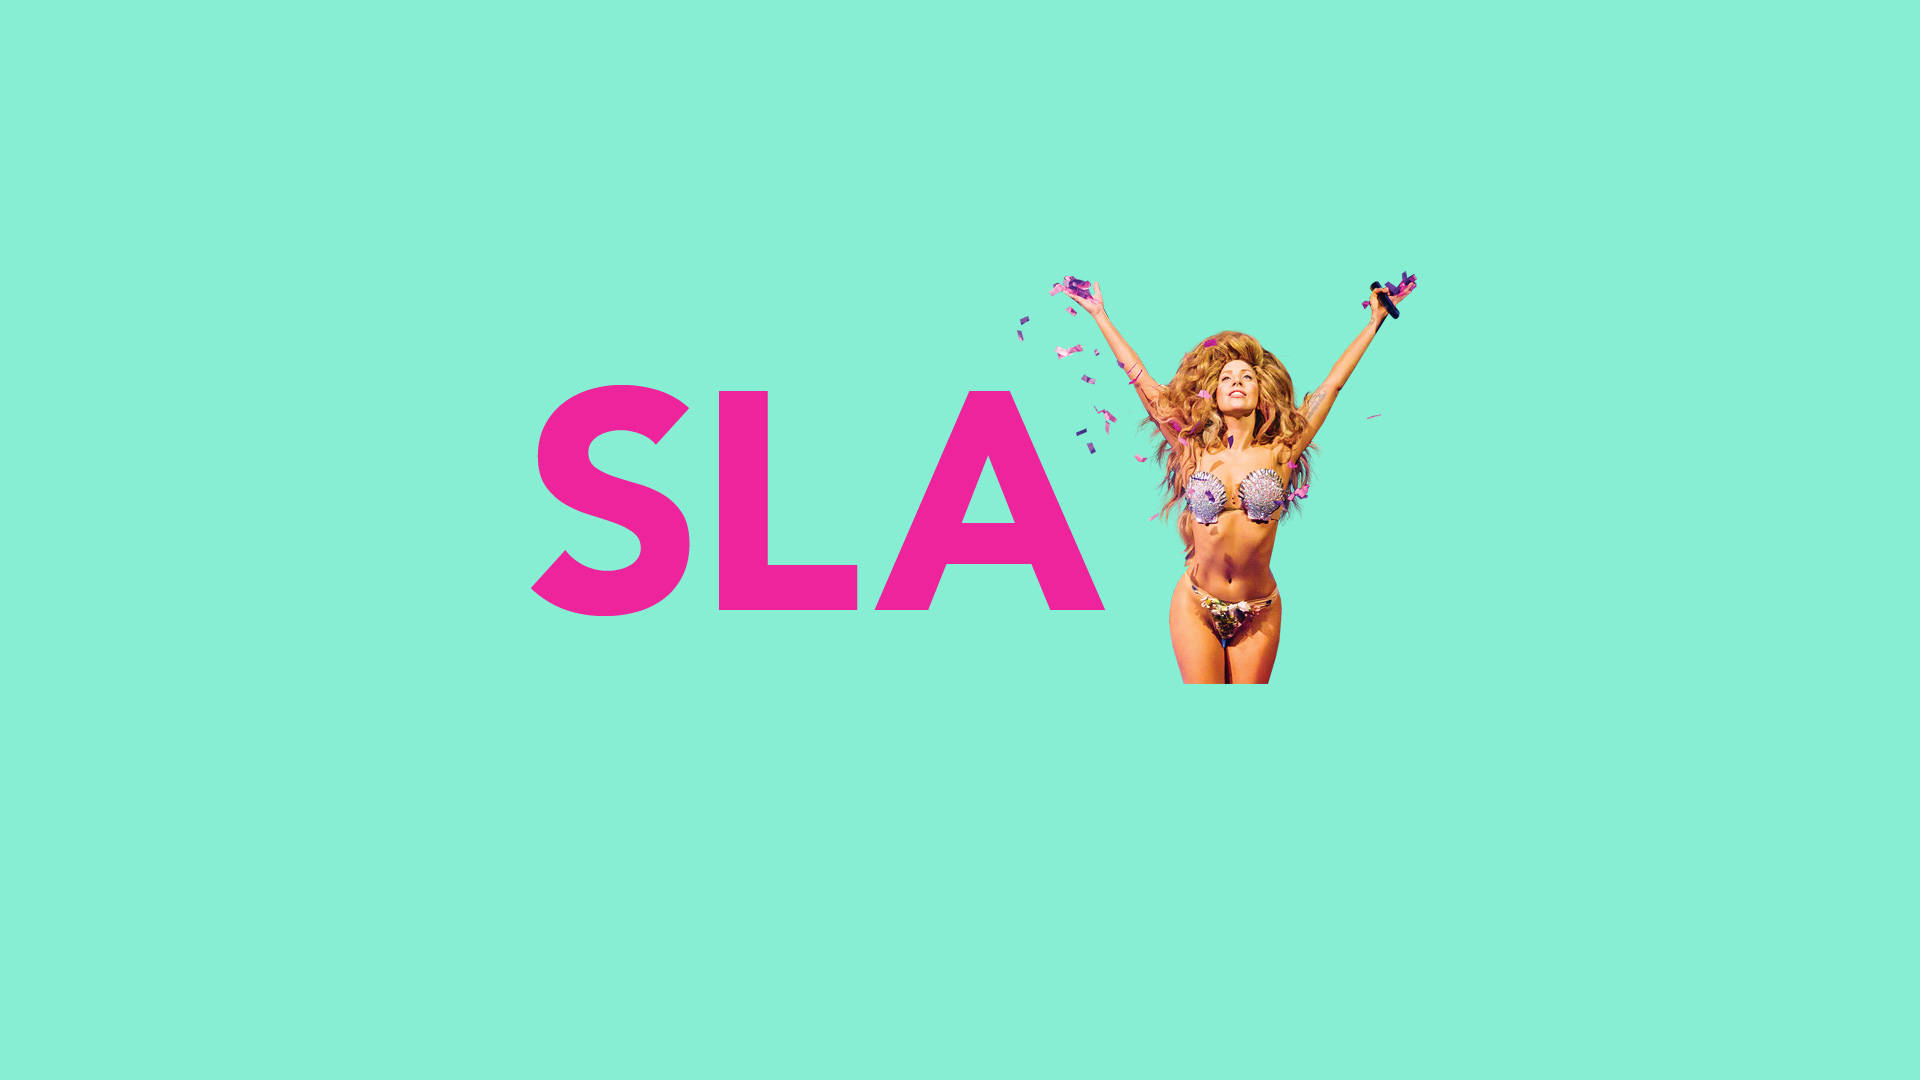 Slay Lady Gaga Background